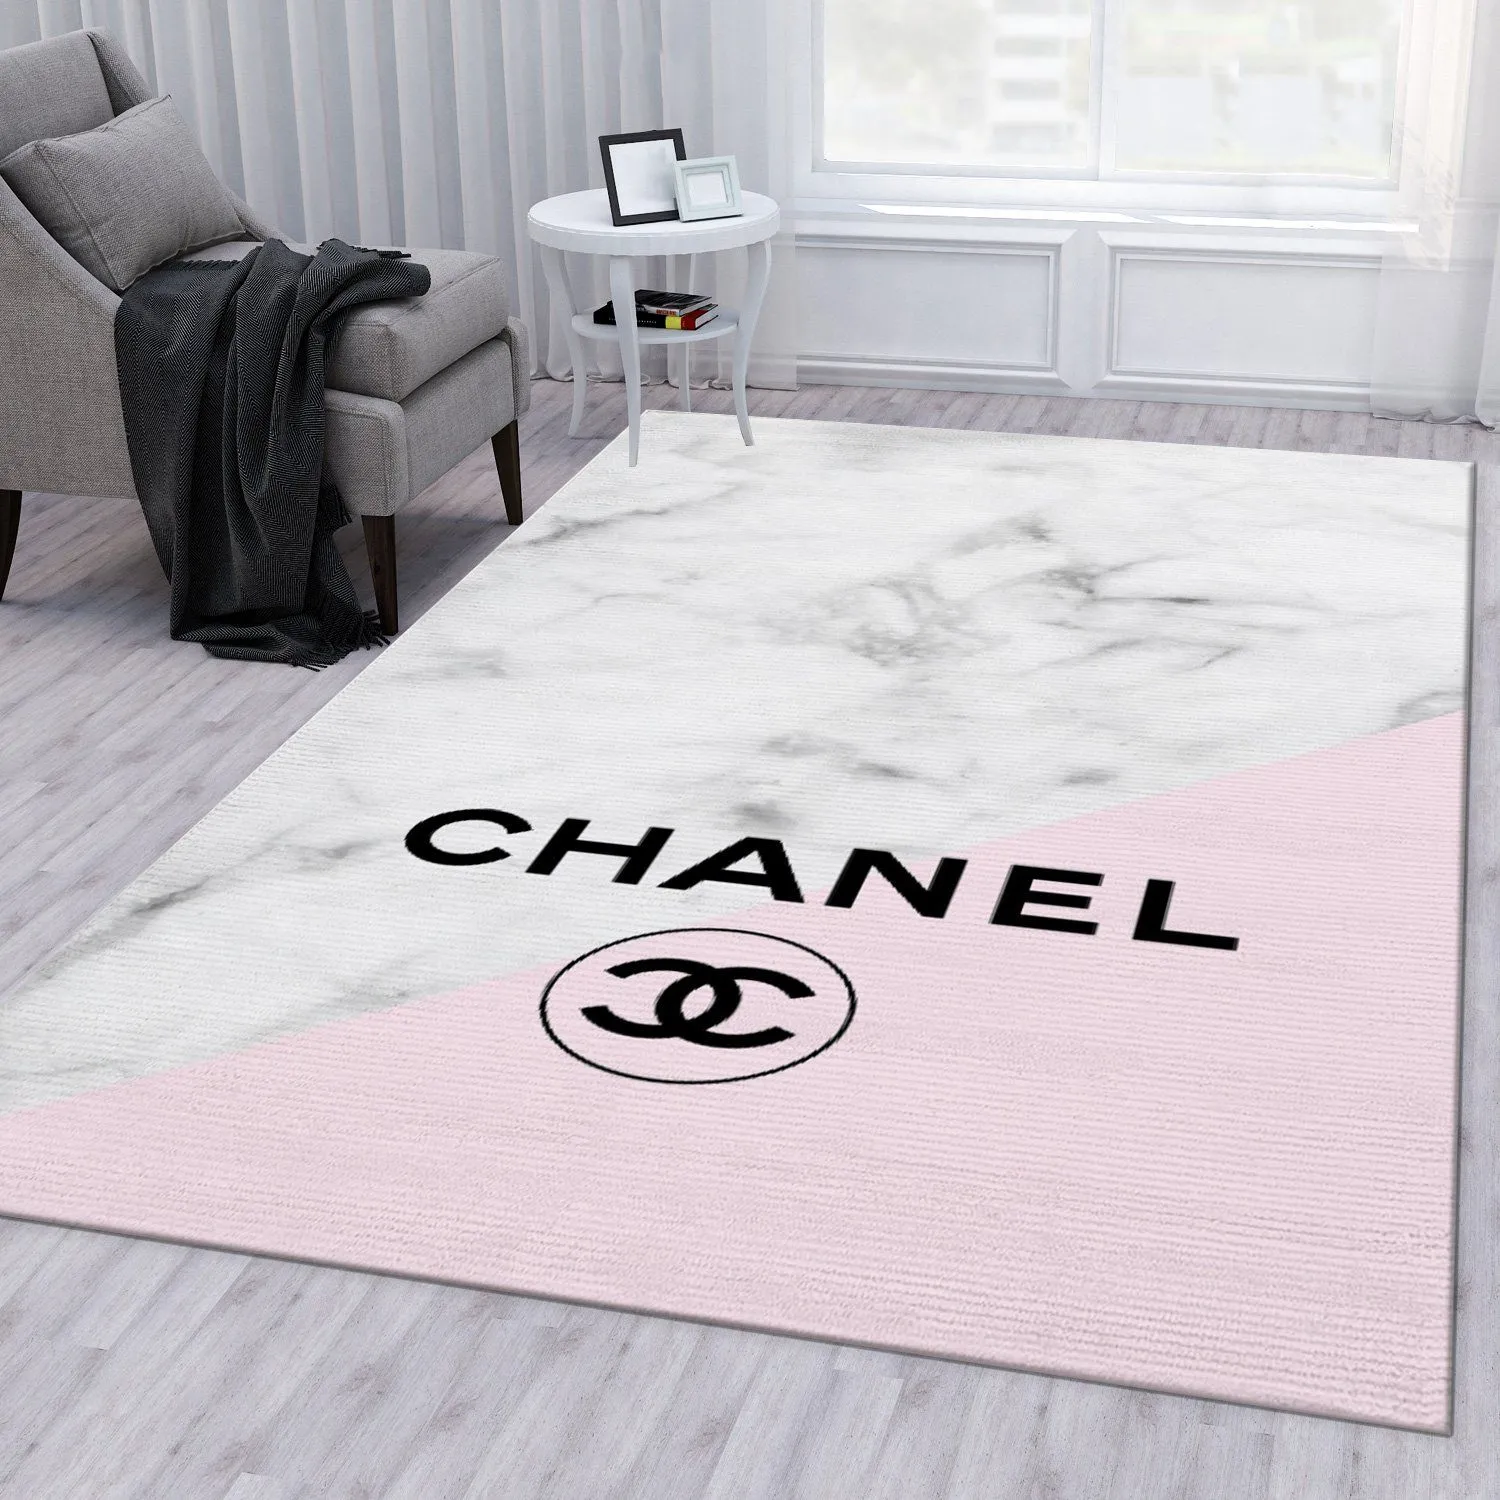 Chanel Luxury Fashion Brand Rug Home Decor Area Carpet Door Mat